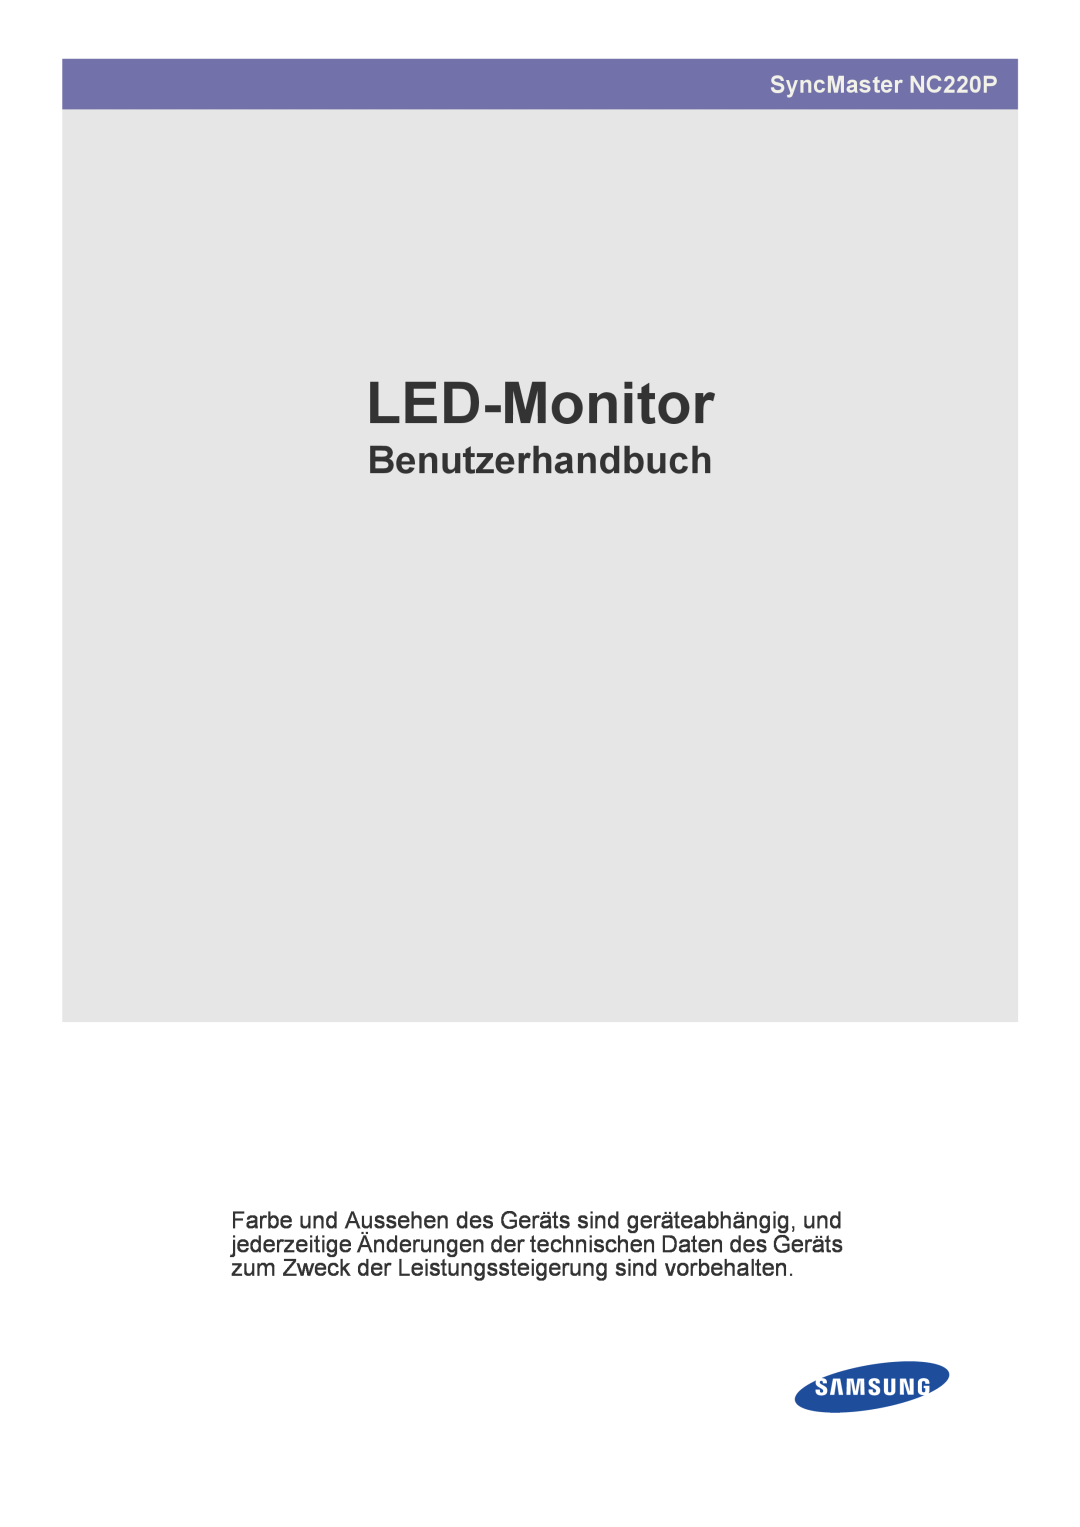 Samsung LF22NPBHBNP/EN manual LED-Monitor, Benutzerhandbuch, SyncMaster NC220P 